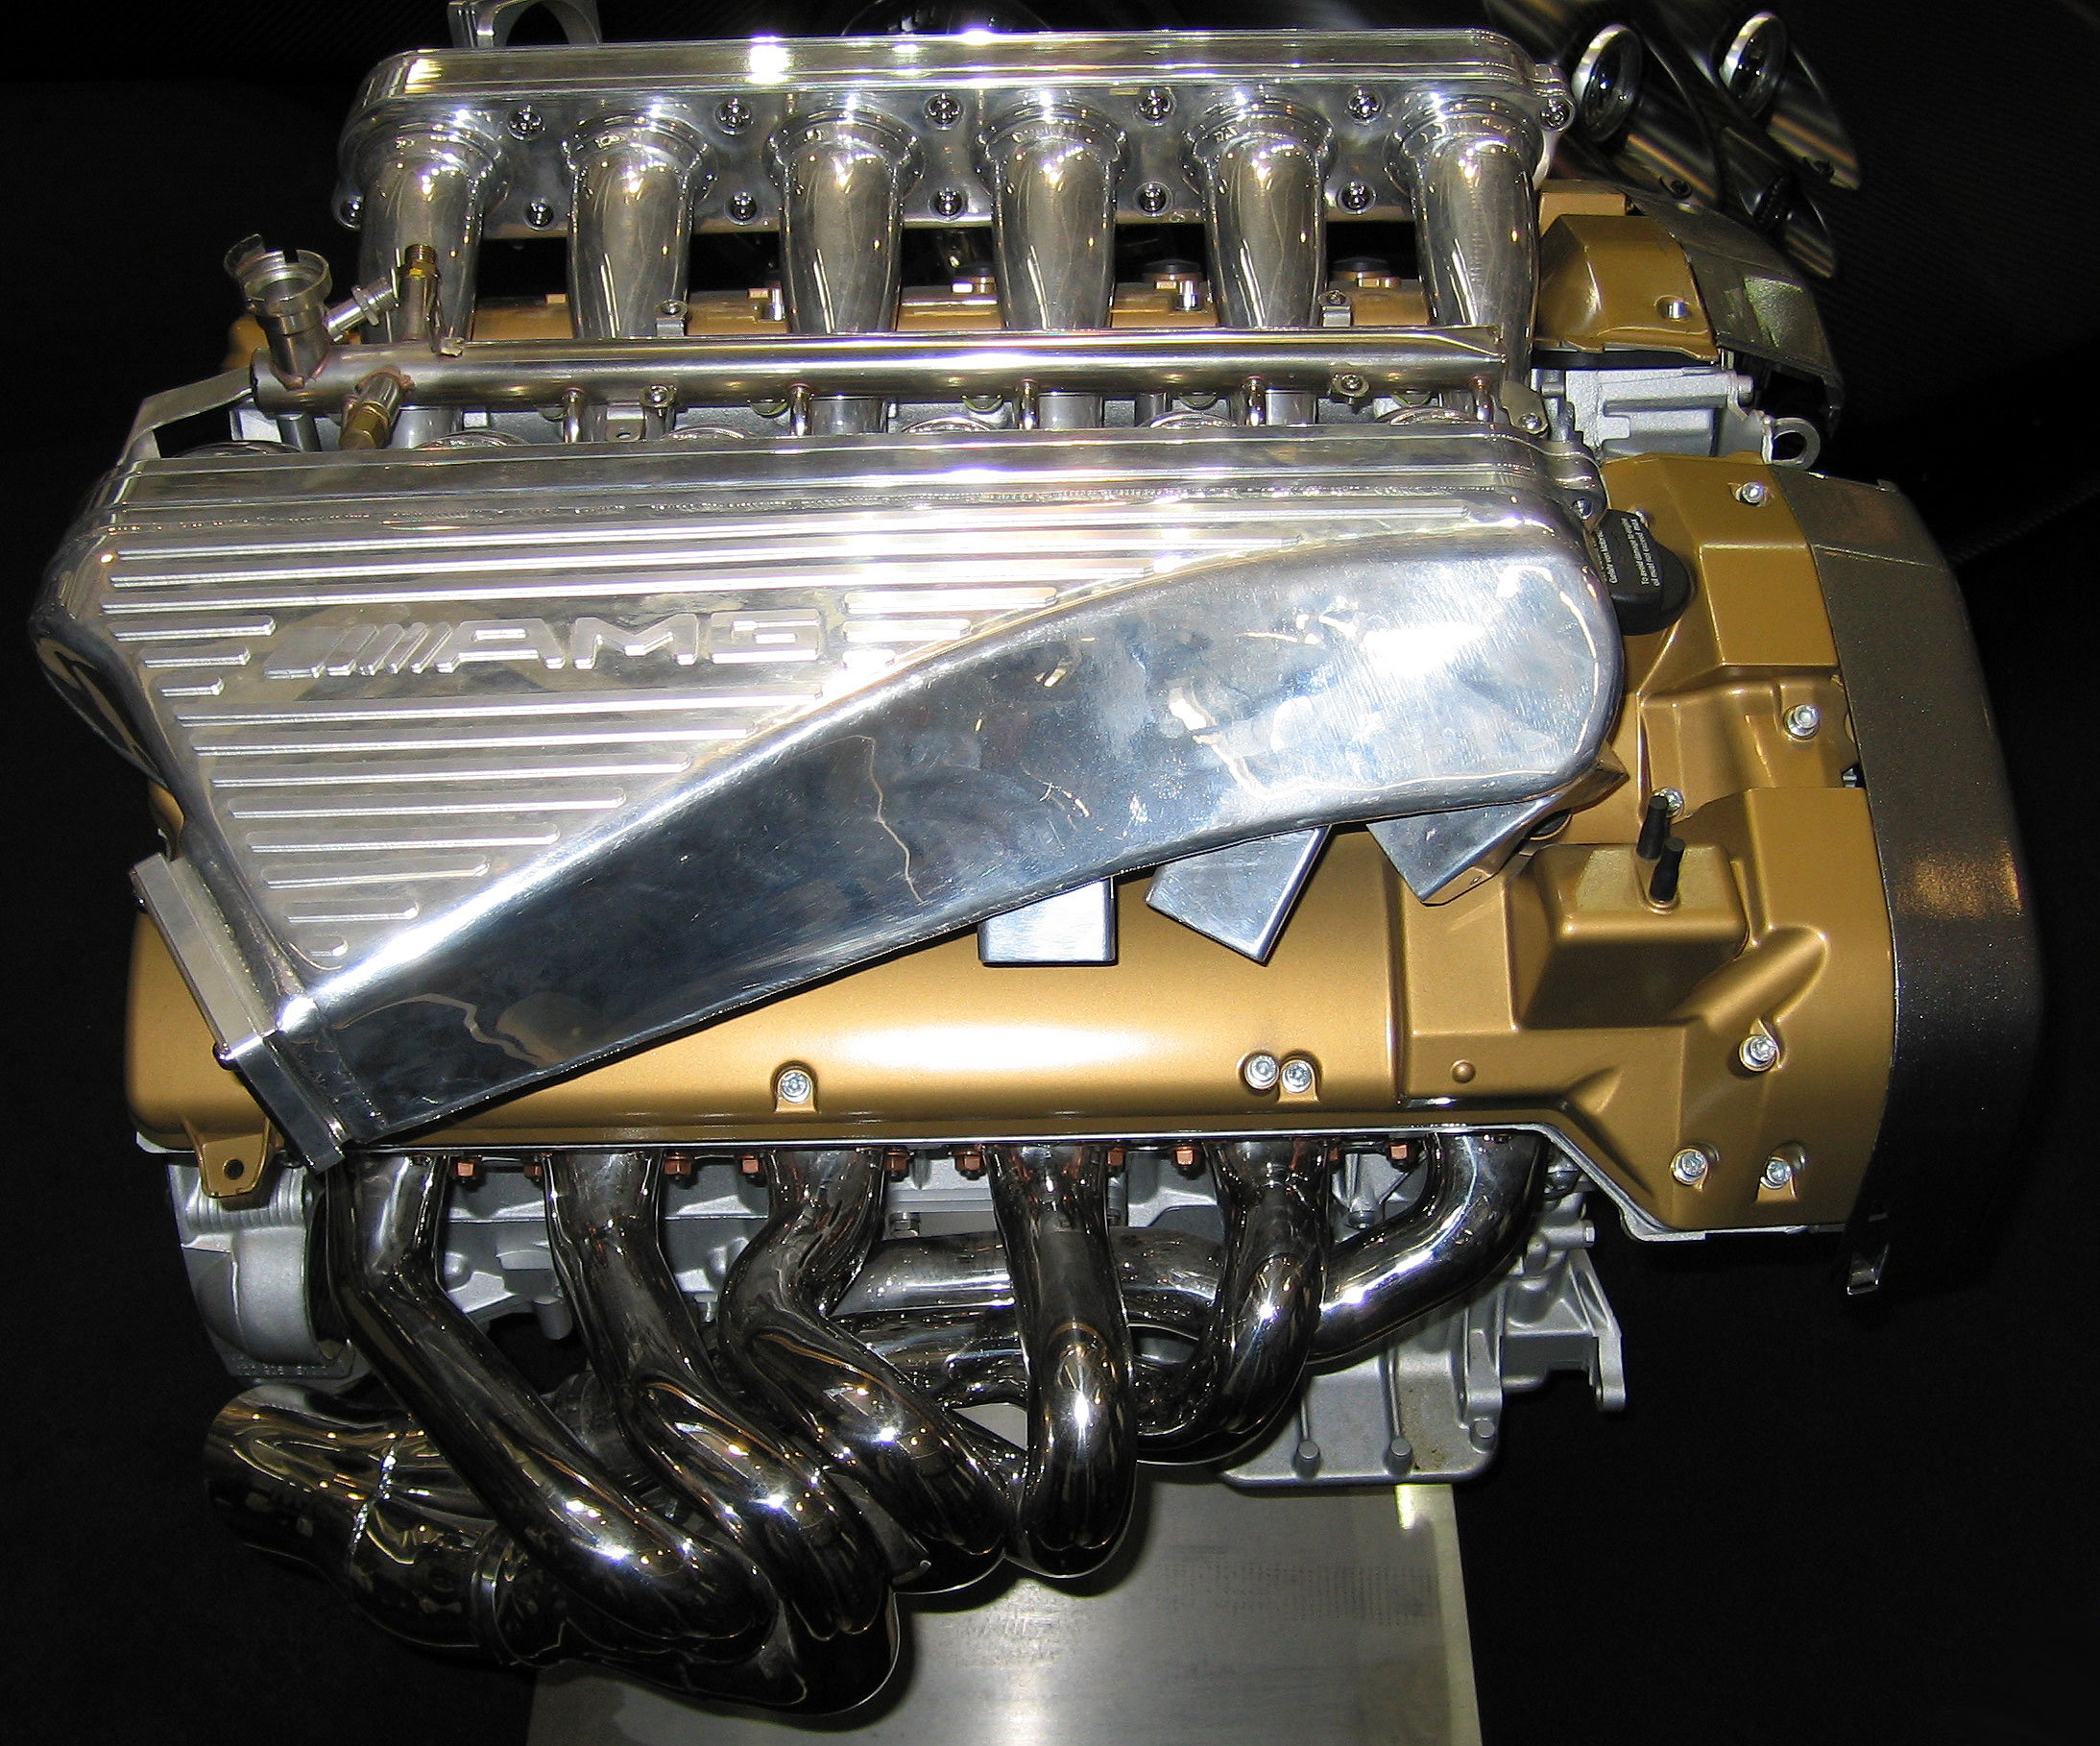 File:Pagani Zonda F engine (AMG V12 7.3l).jpg - Wikimedia Commons